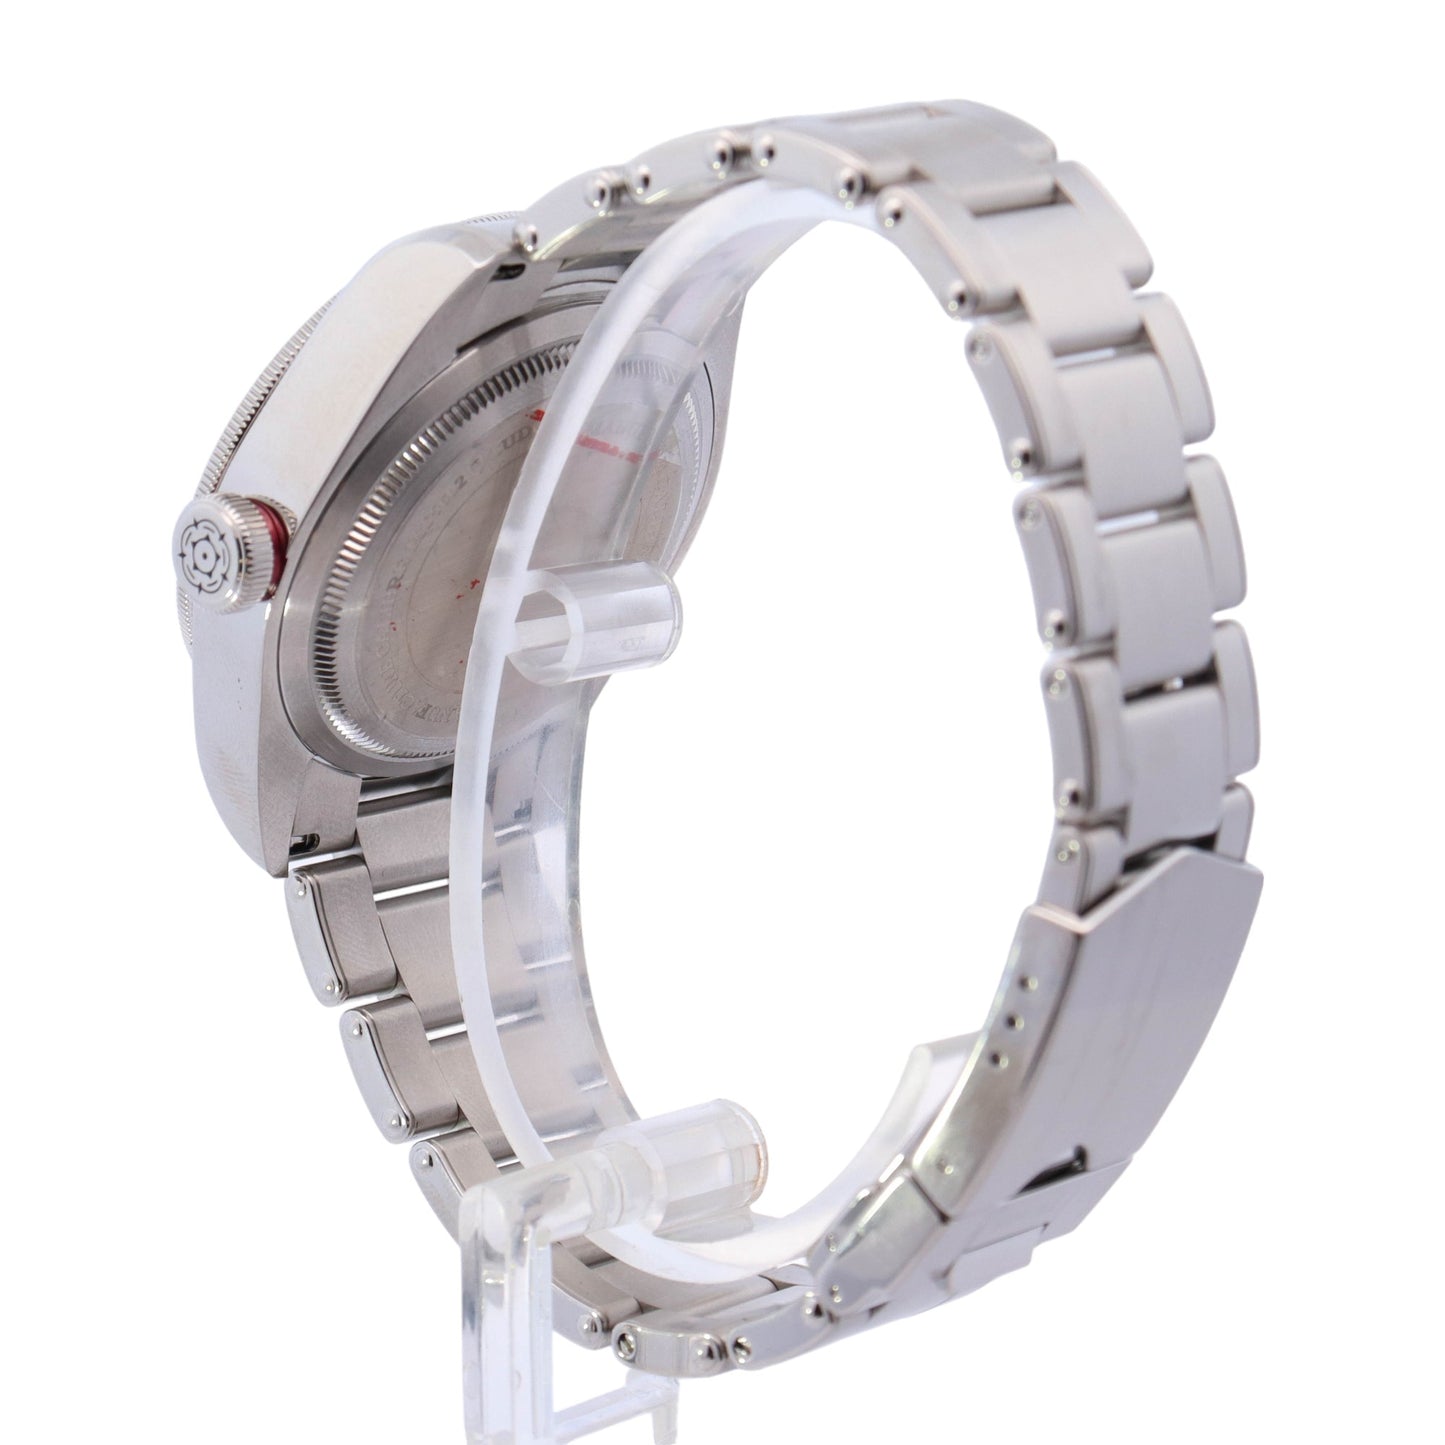 Tudor Black Bay Stainless Steel 41mm Black Dot Dial Watch | Ref# 79230R - Happy Jewelers Fine Jewelry Lifetime Warranty